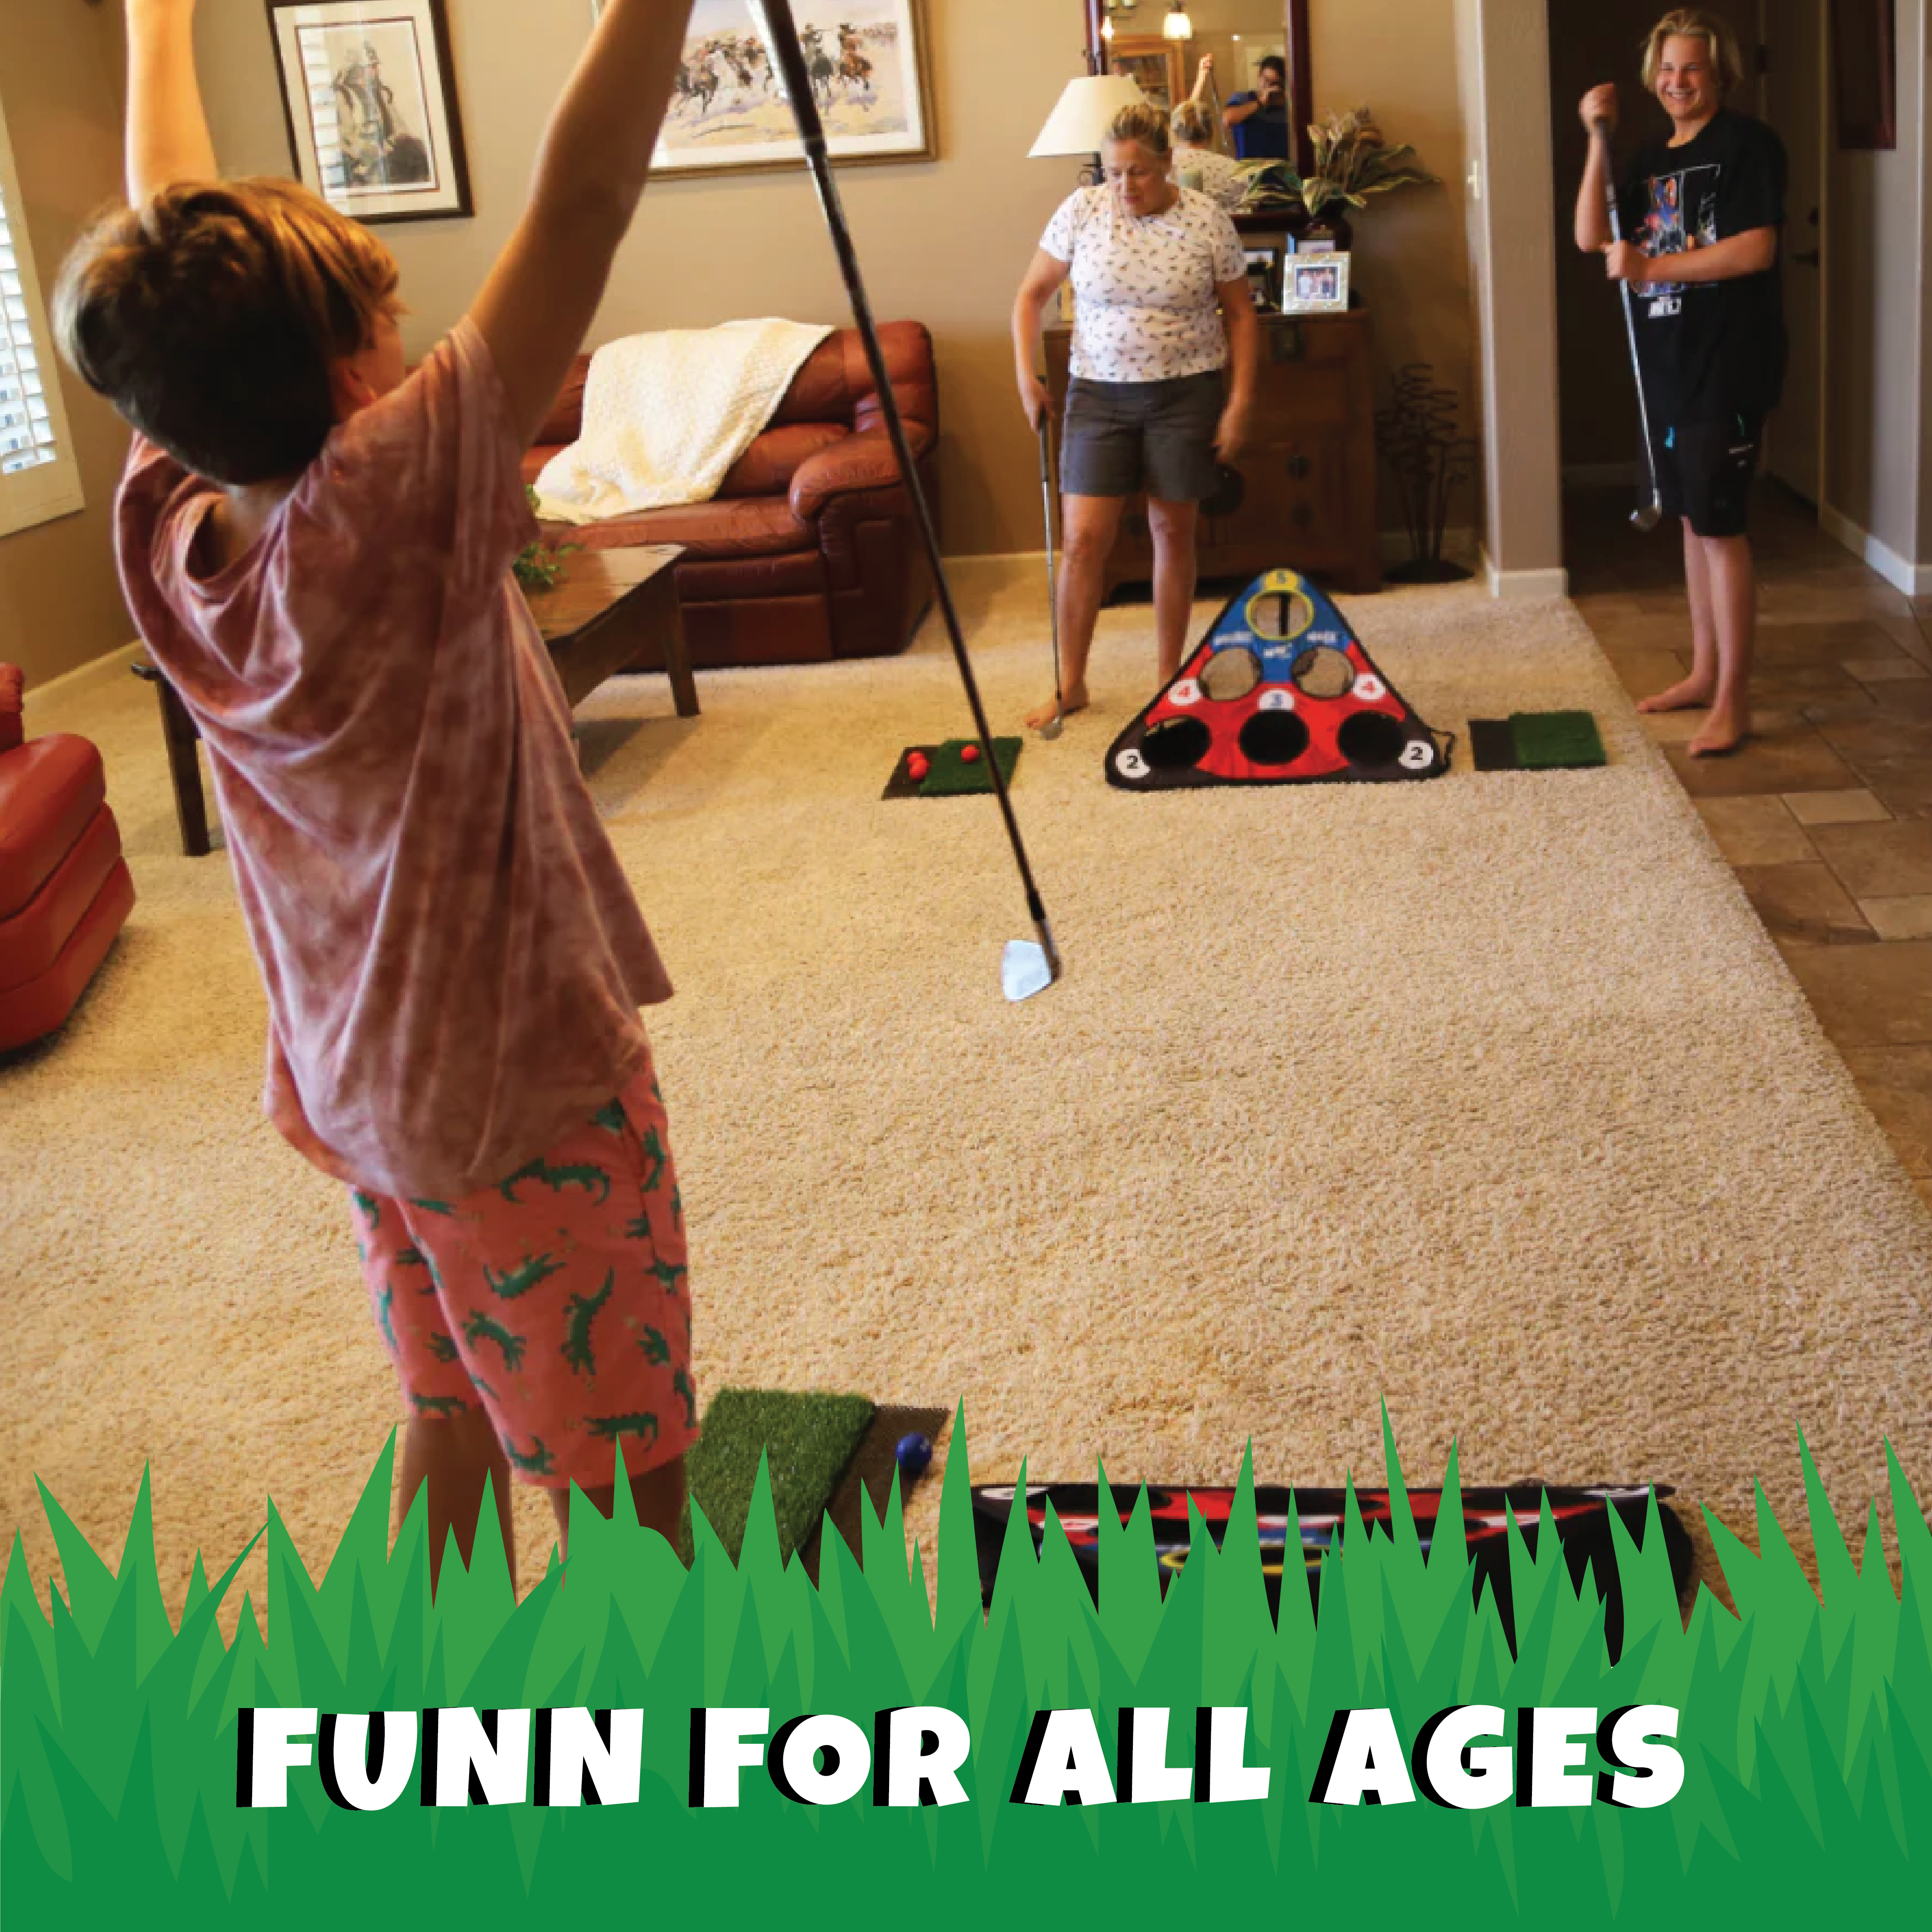 CHIP NN' Hole Golf Game Set | Cornhole Meets Golf | Targets, Golf mats, and Foam Golf Balls Included |